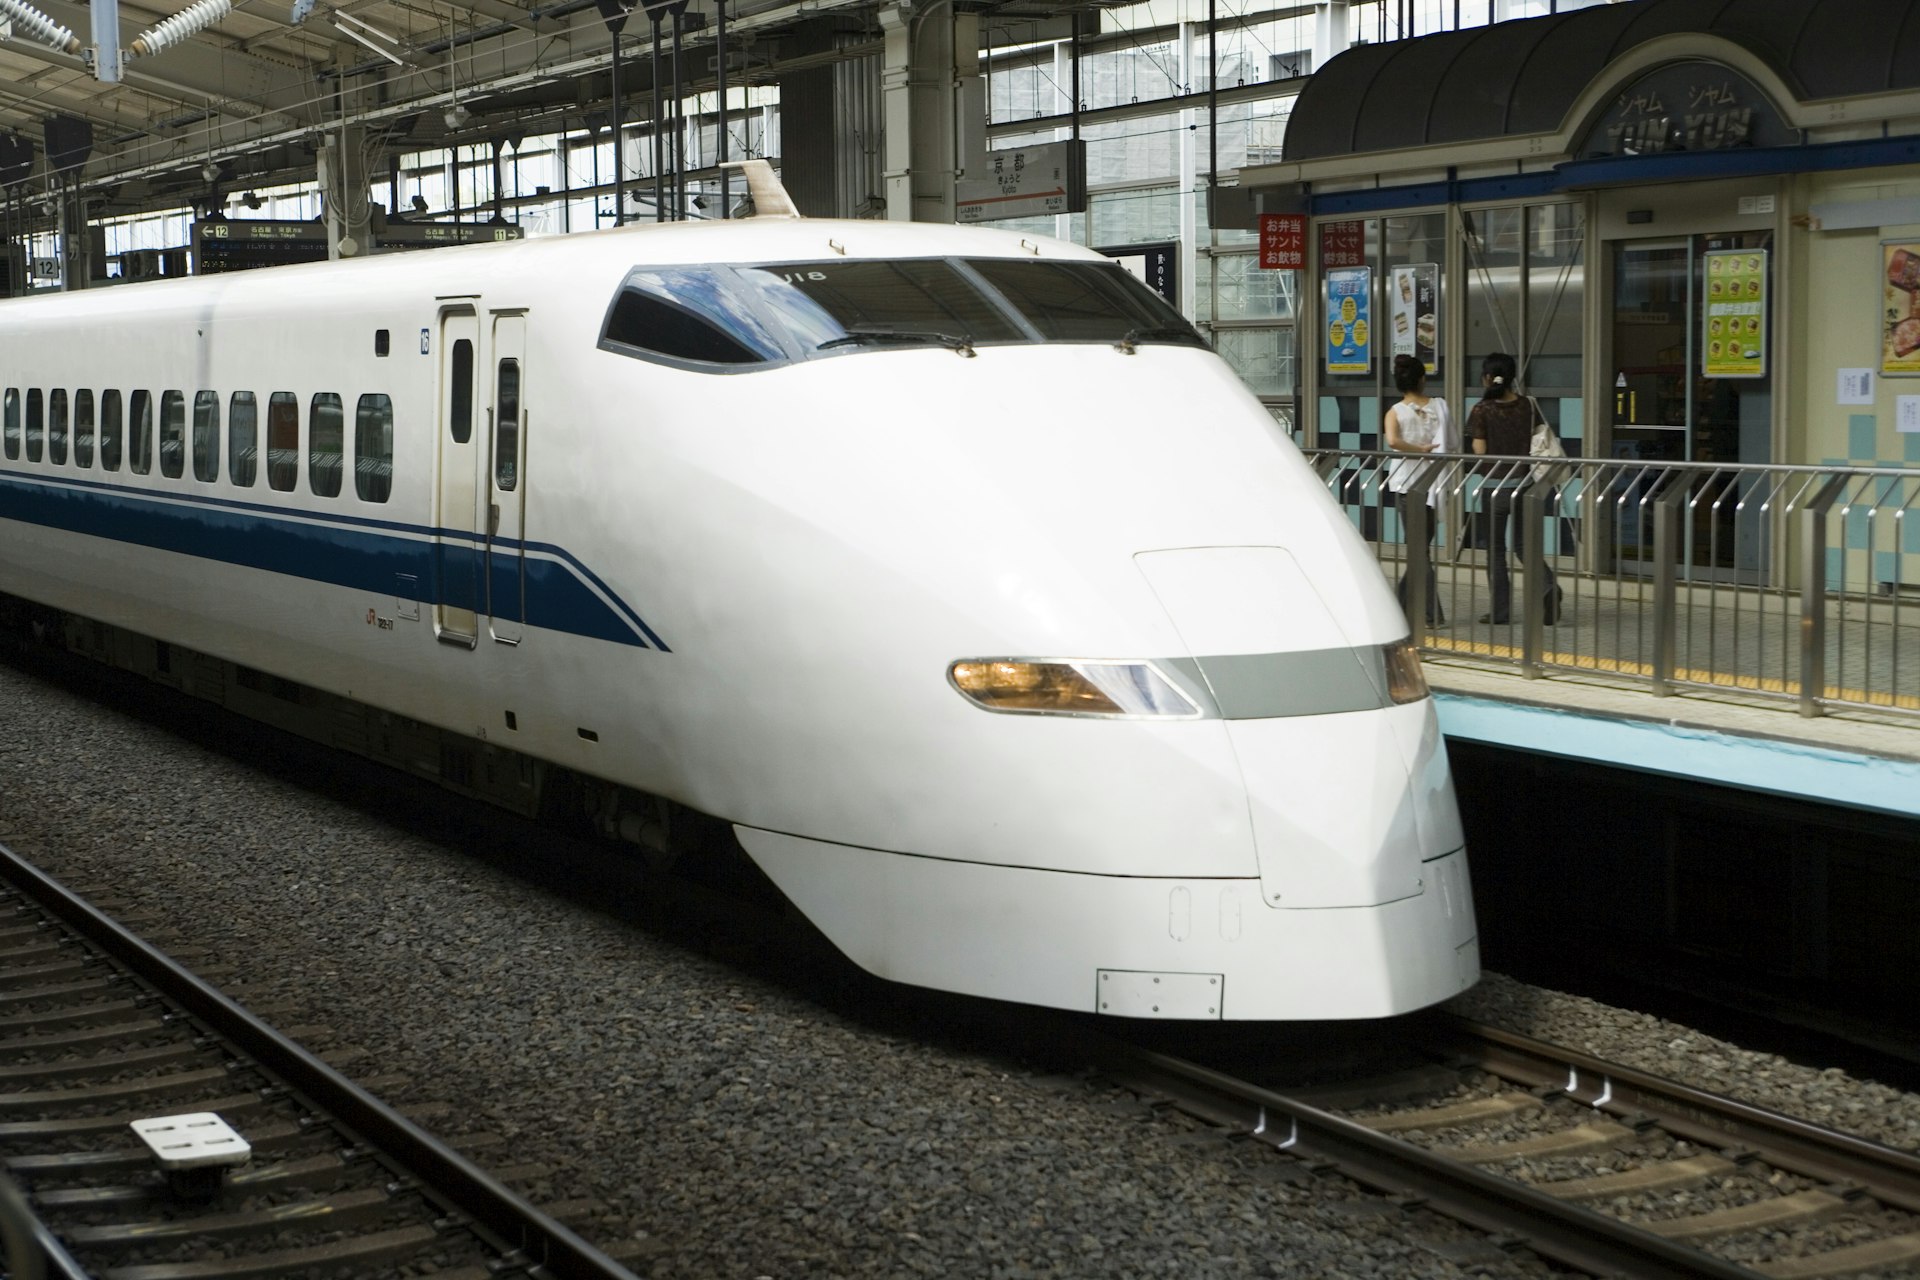 Shinkansen (high speed train) at Kyoto Station